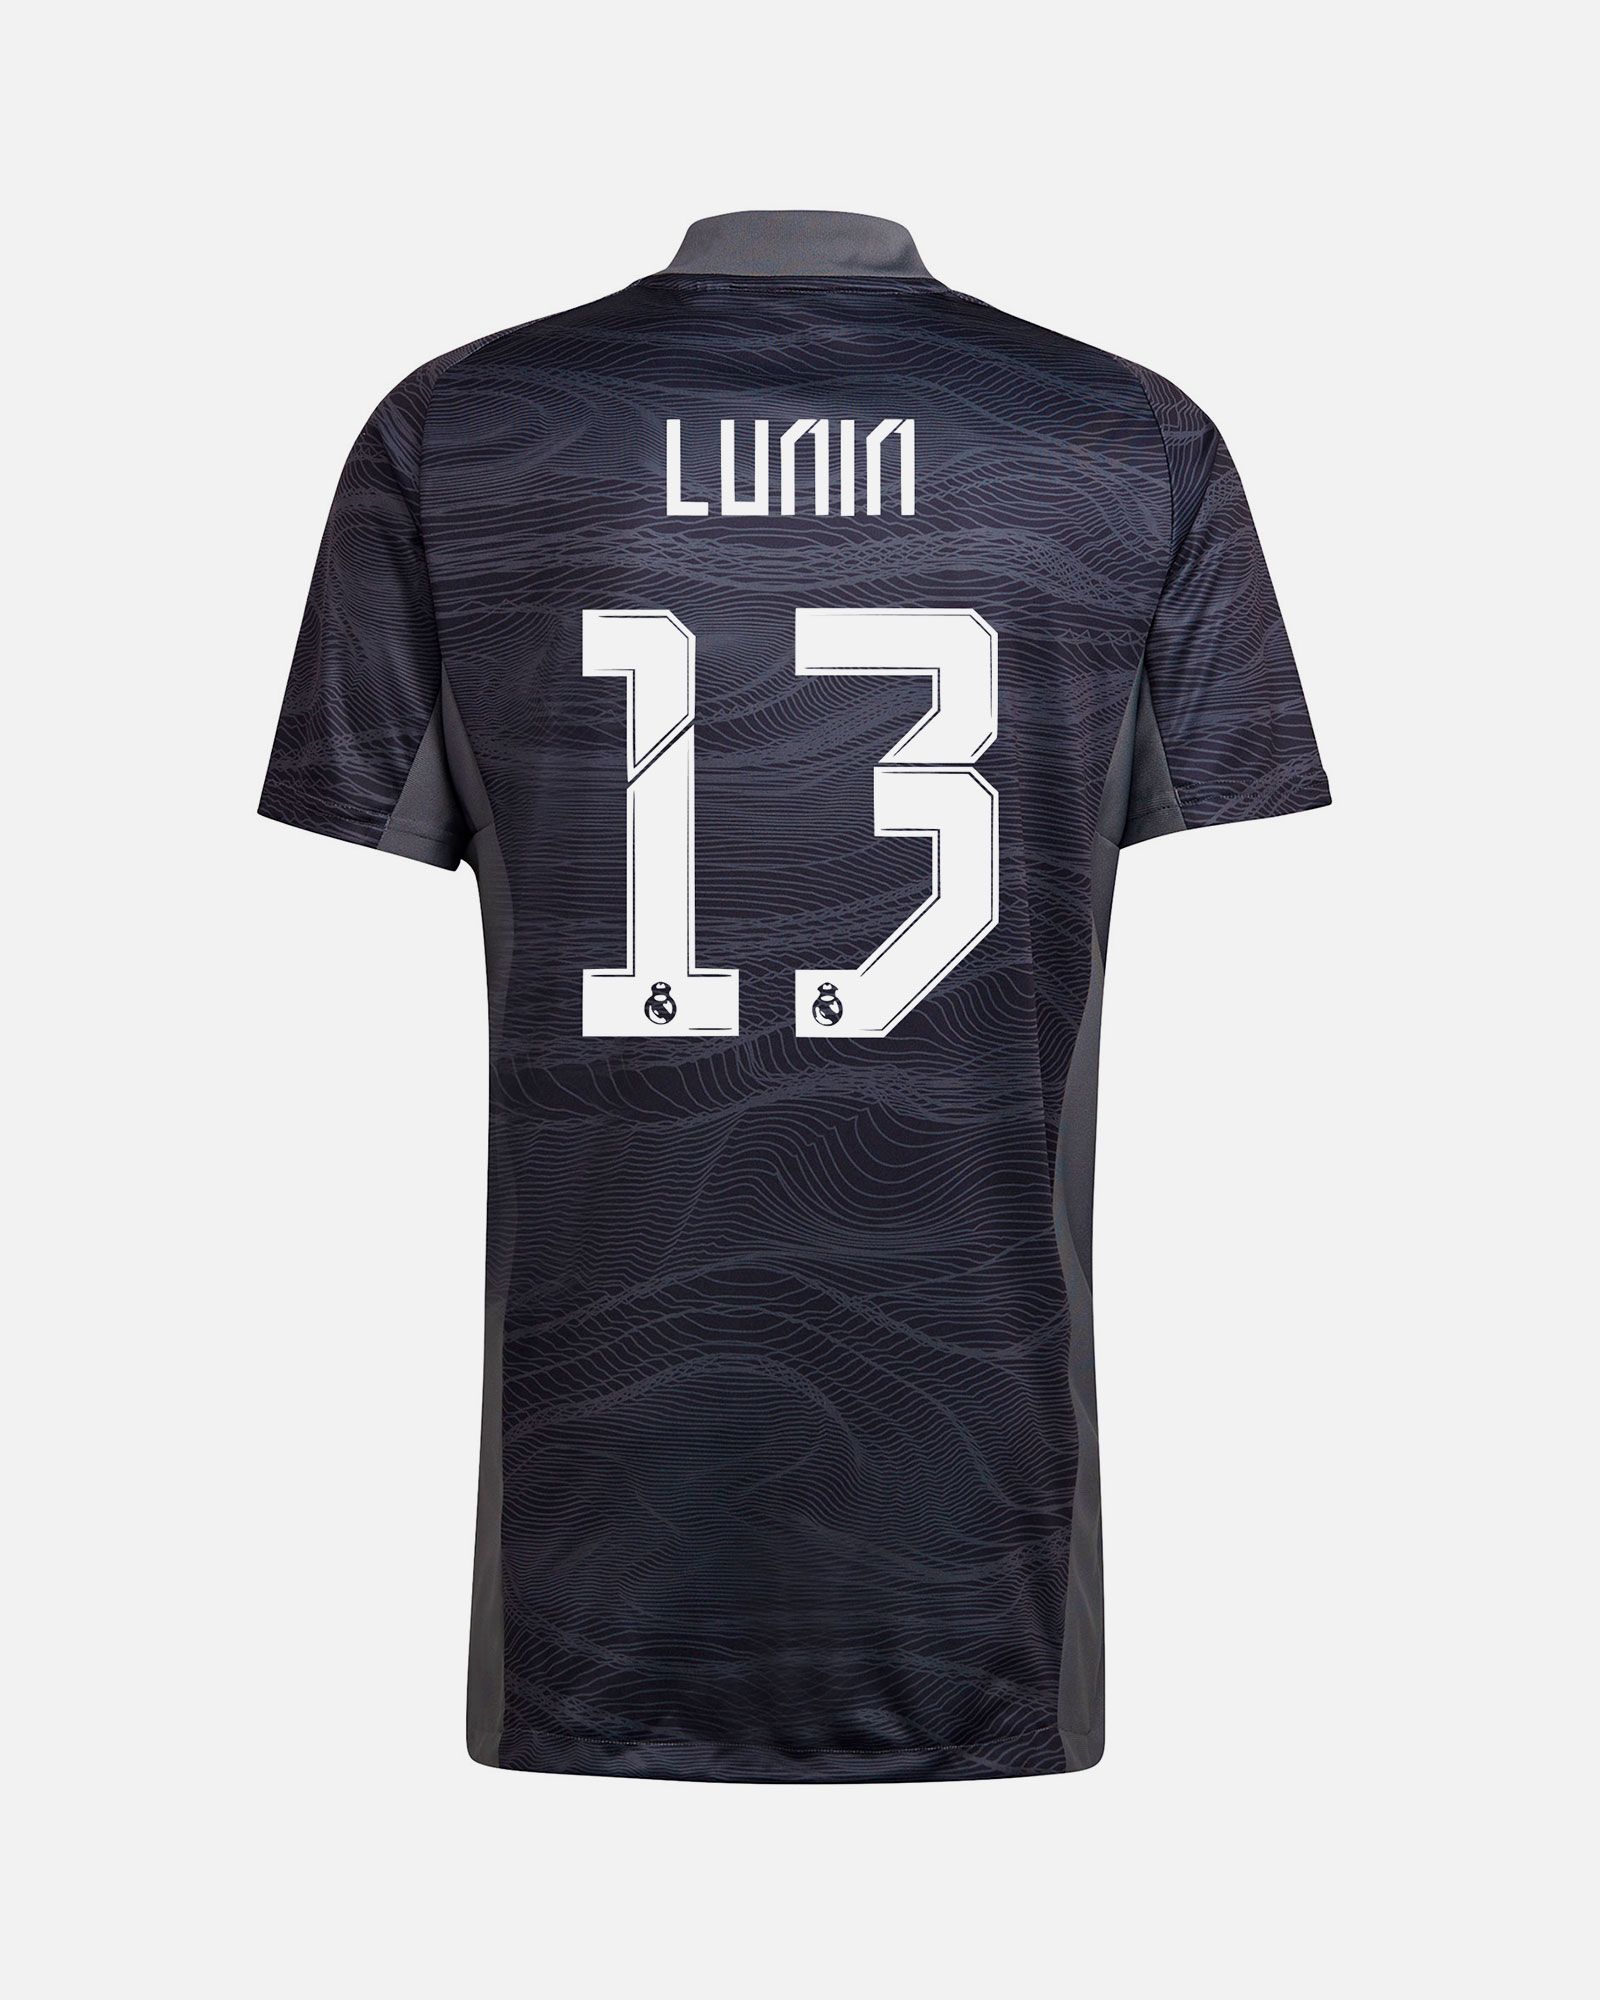 Camiseta Portero Real Madrid 2021/2022 Lunin - Fútbol Factory